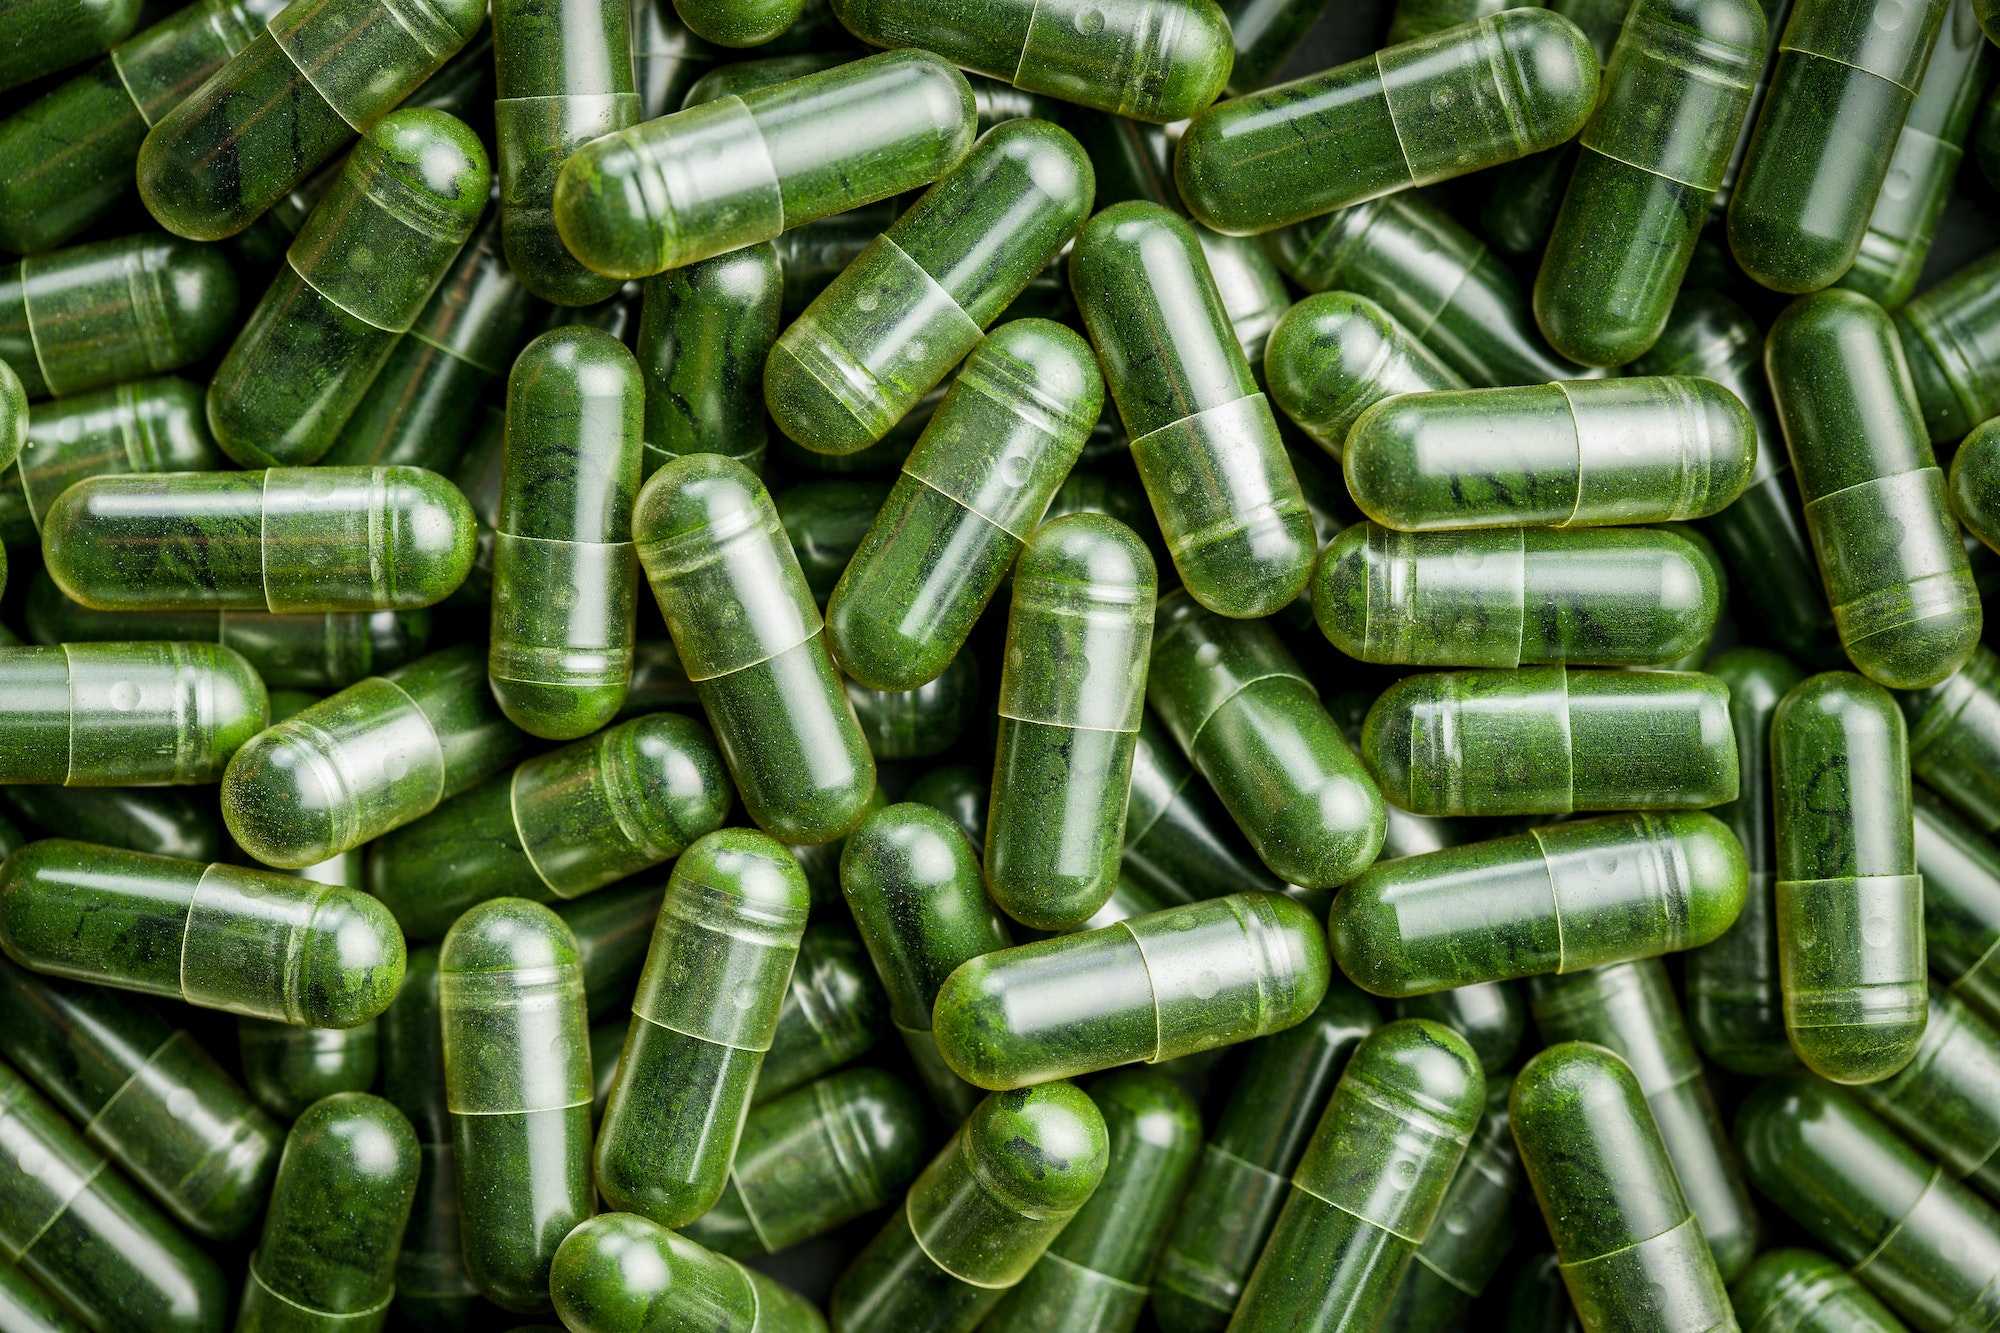 Green chlorella pills or green barley pills.